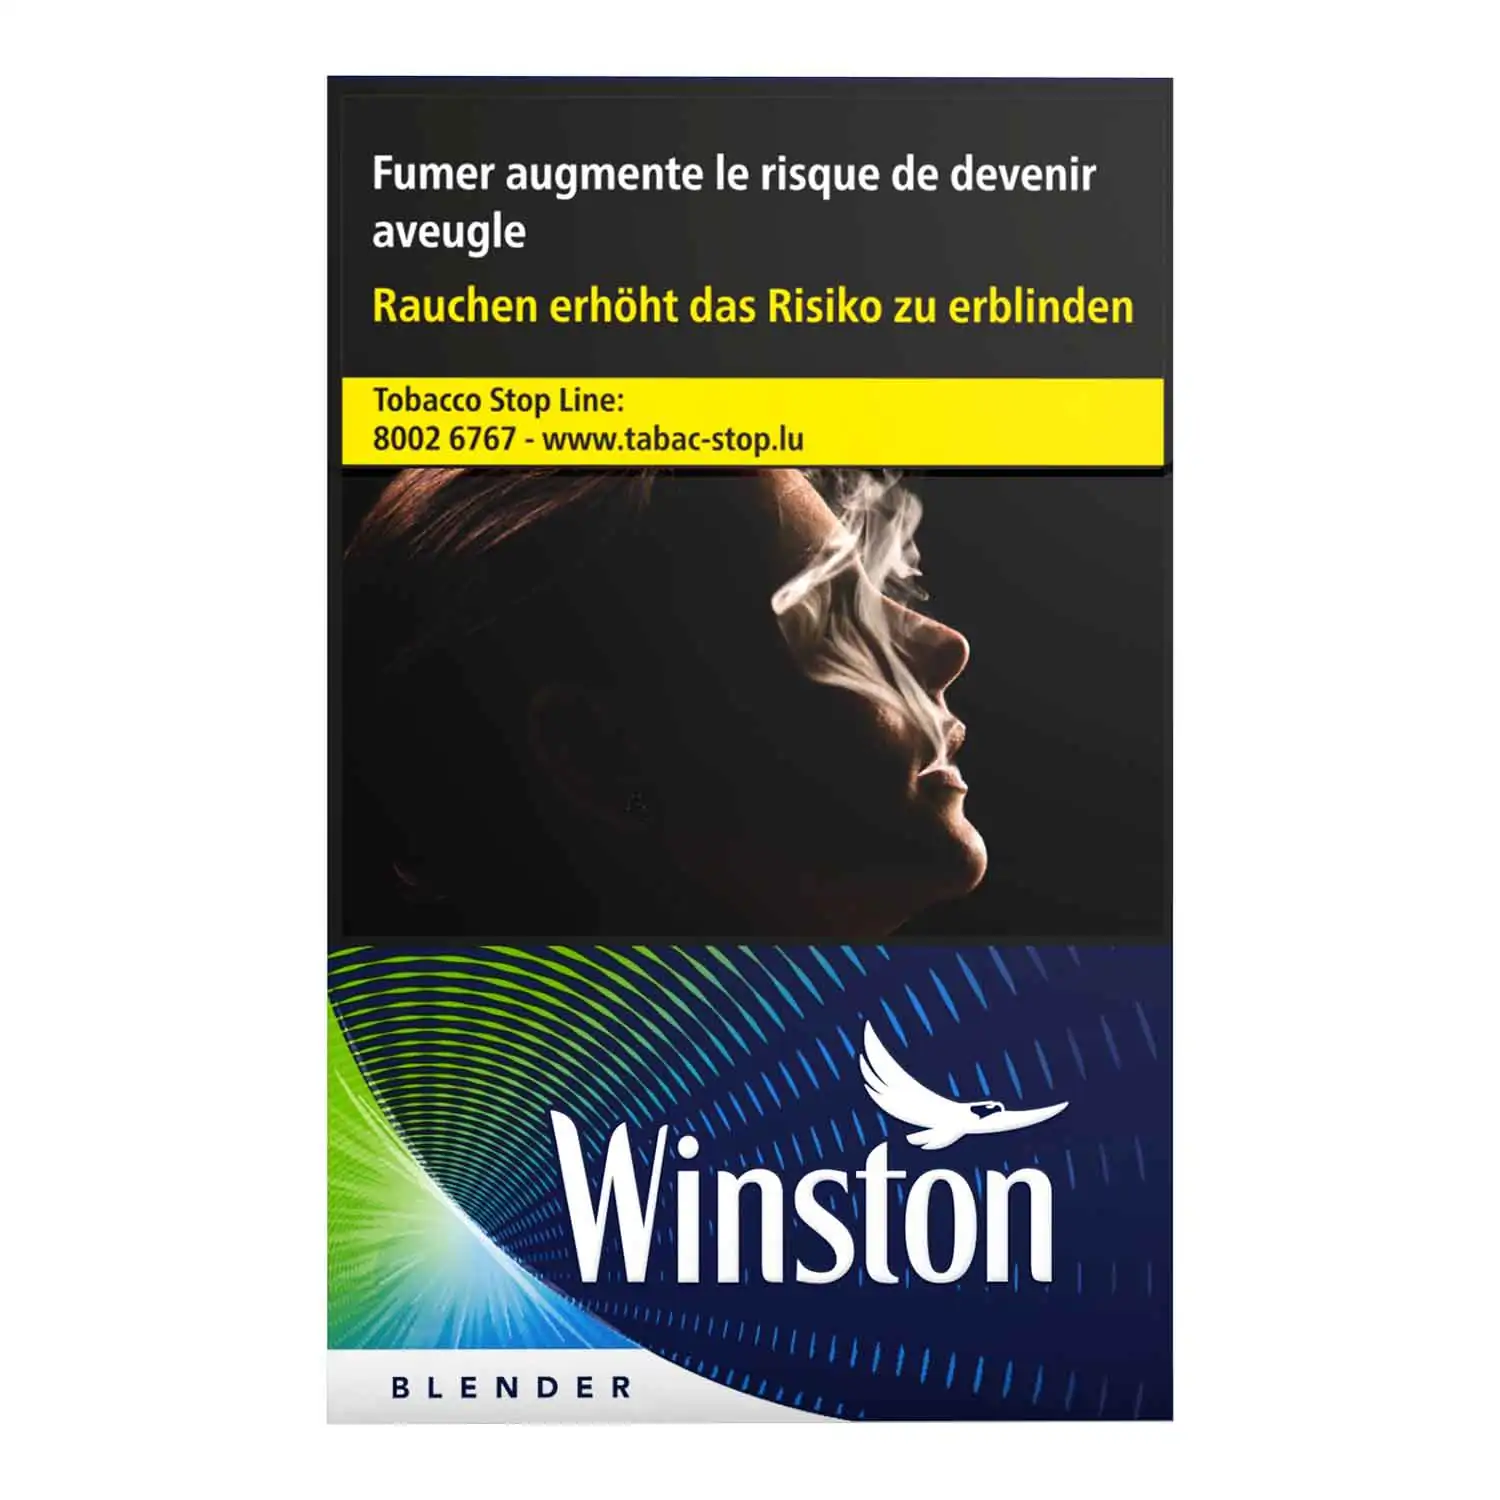 Winston blender 20 - Buy at Real Tobacco